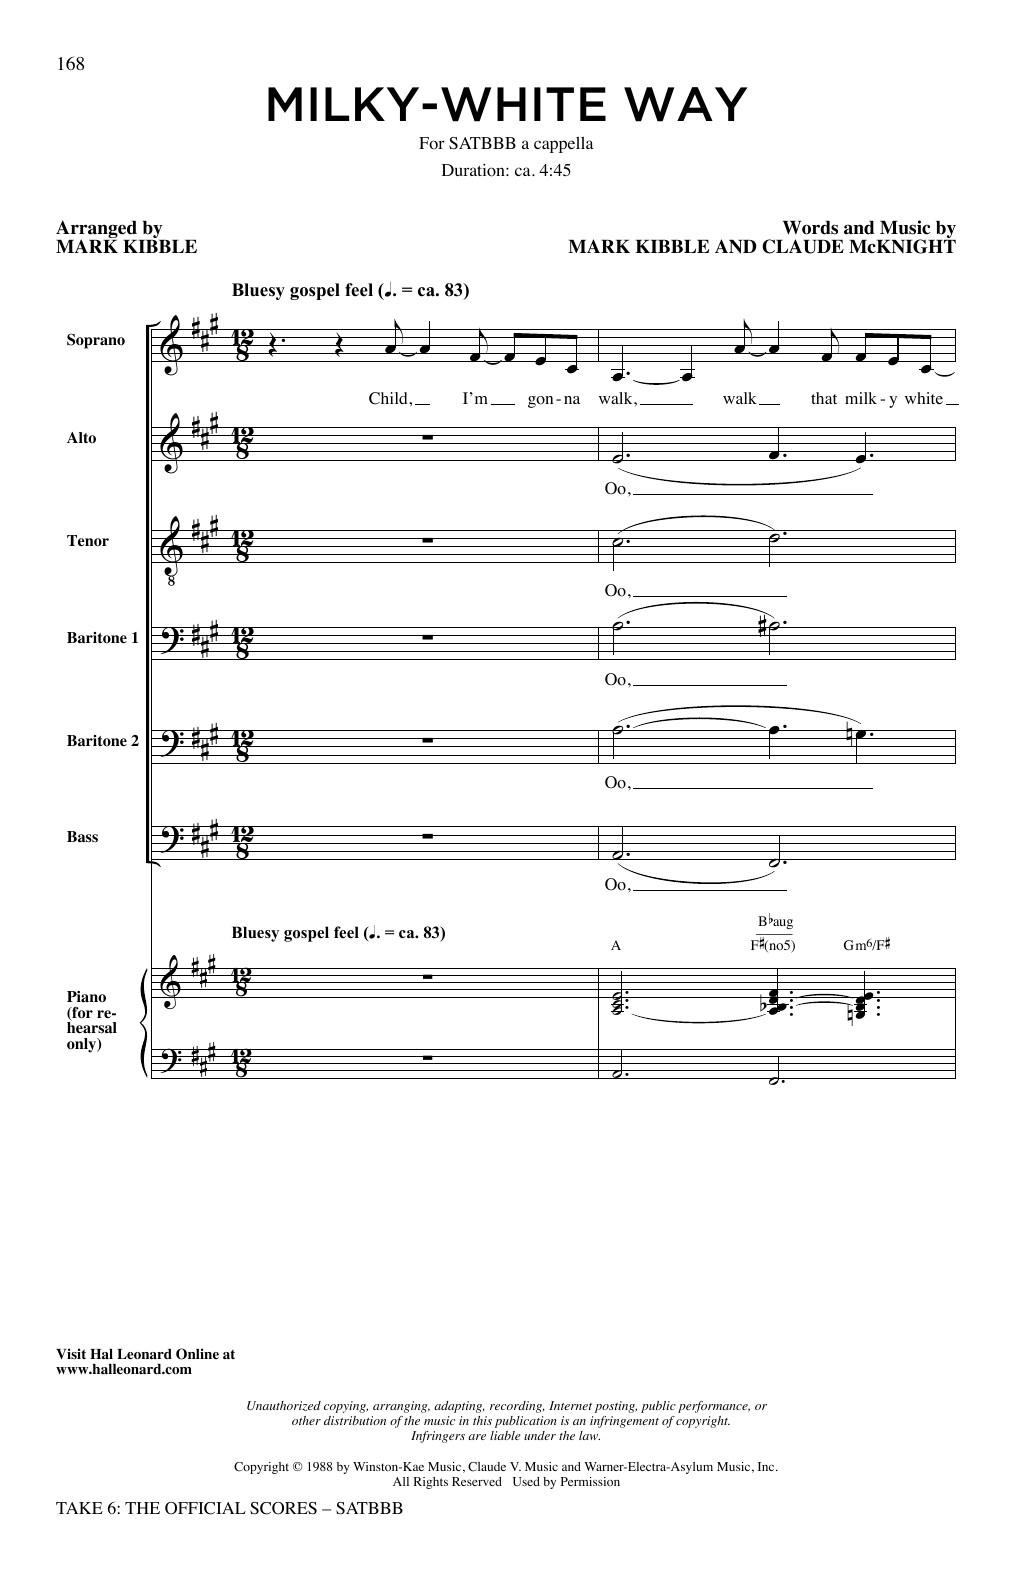 Take 6 Milky White Way Sheet Music Notes & Chords for SATB Choir - Download or Print PDF